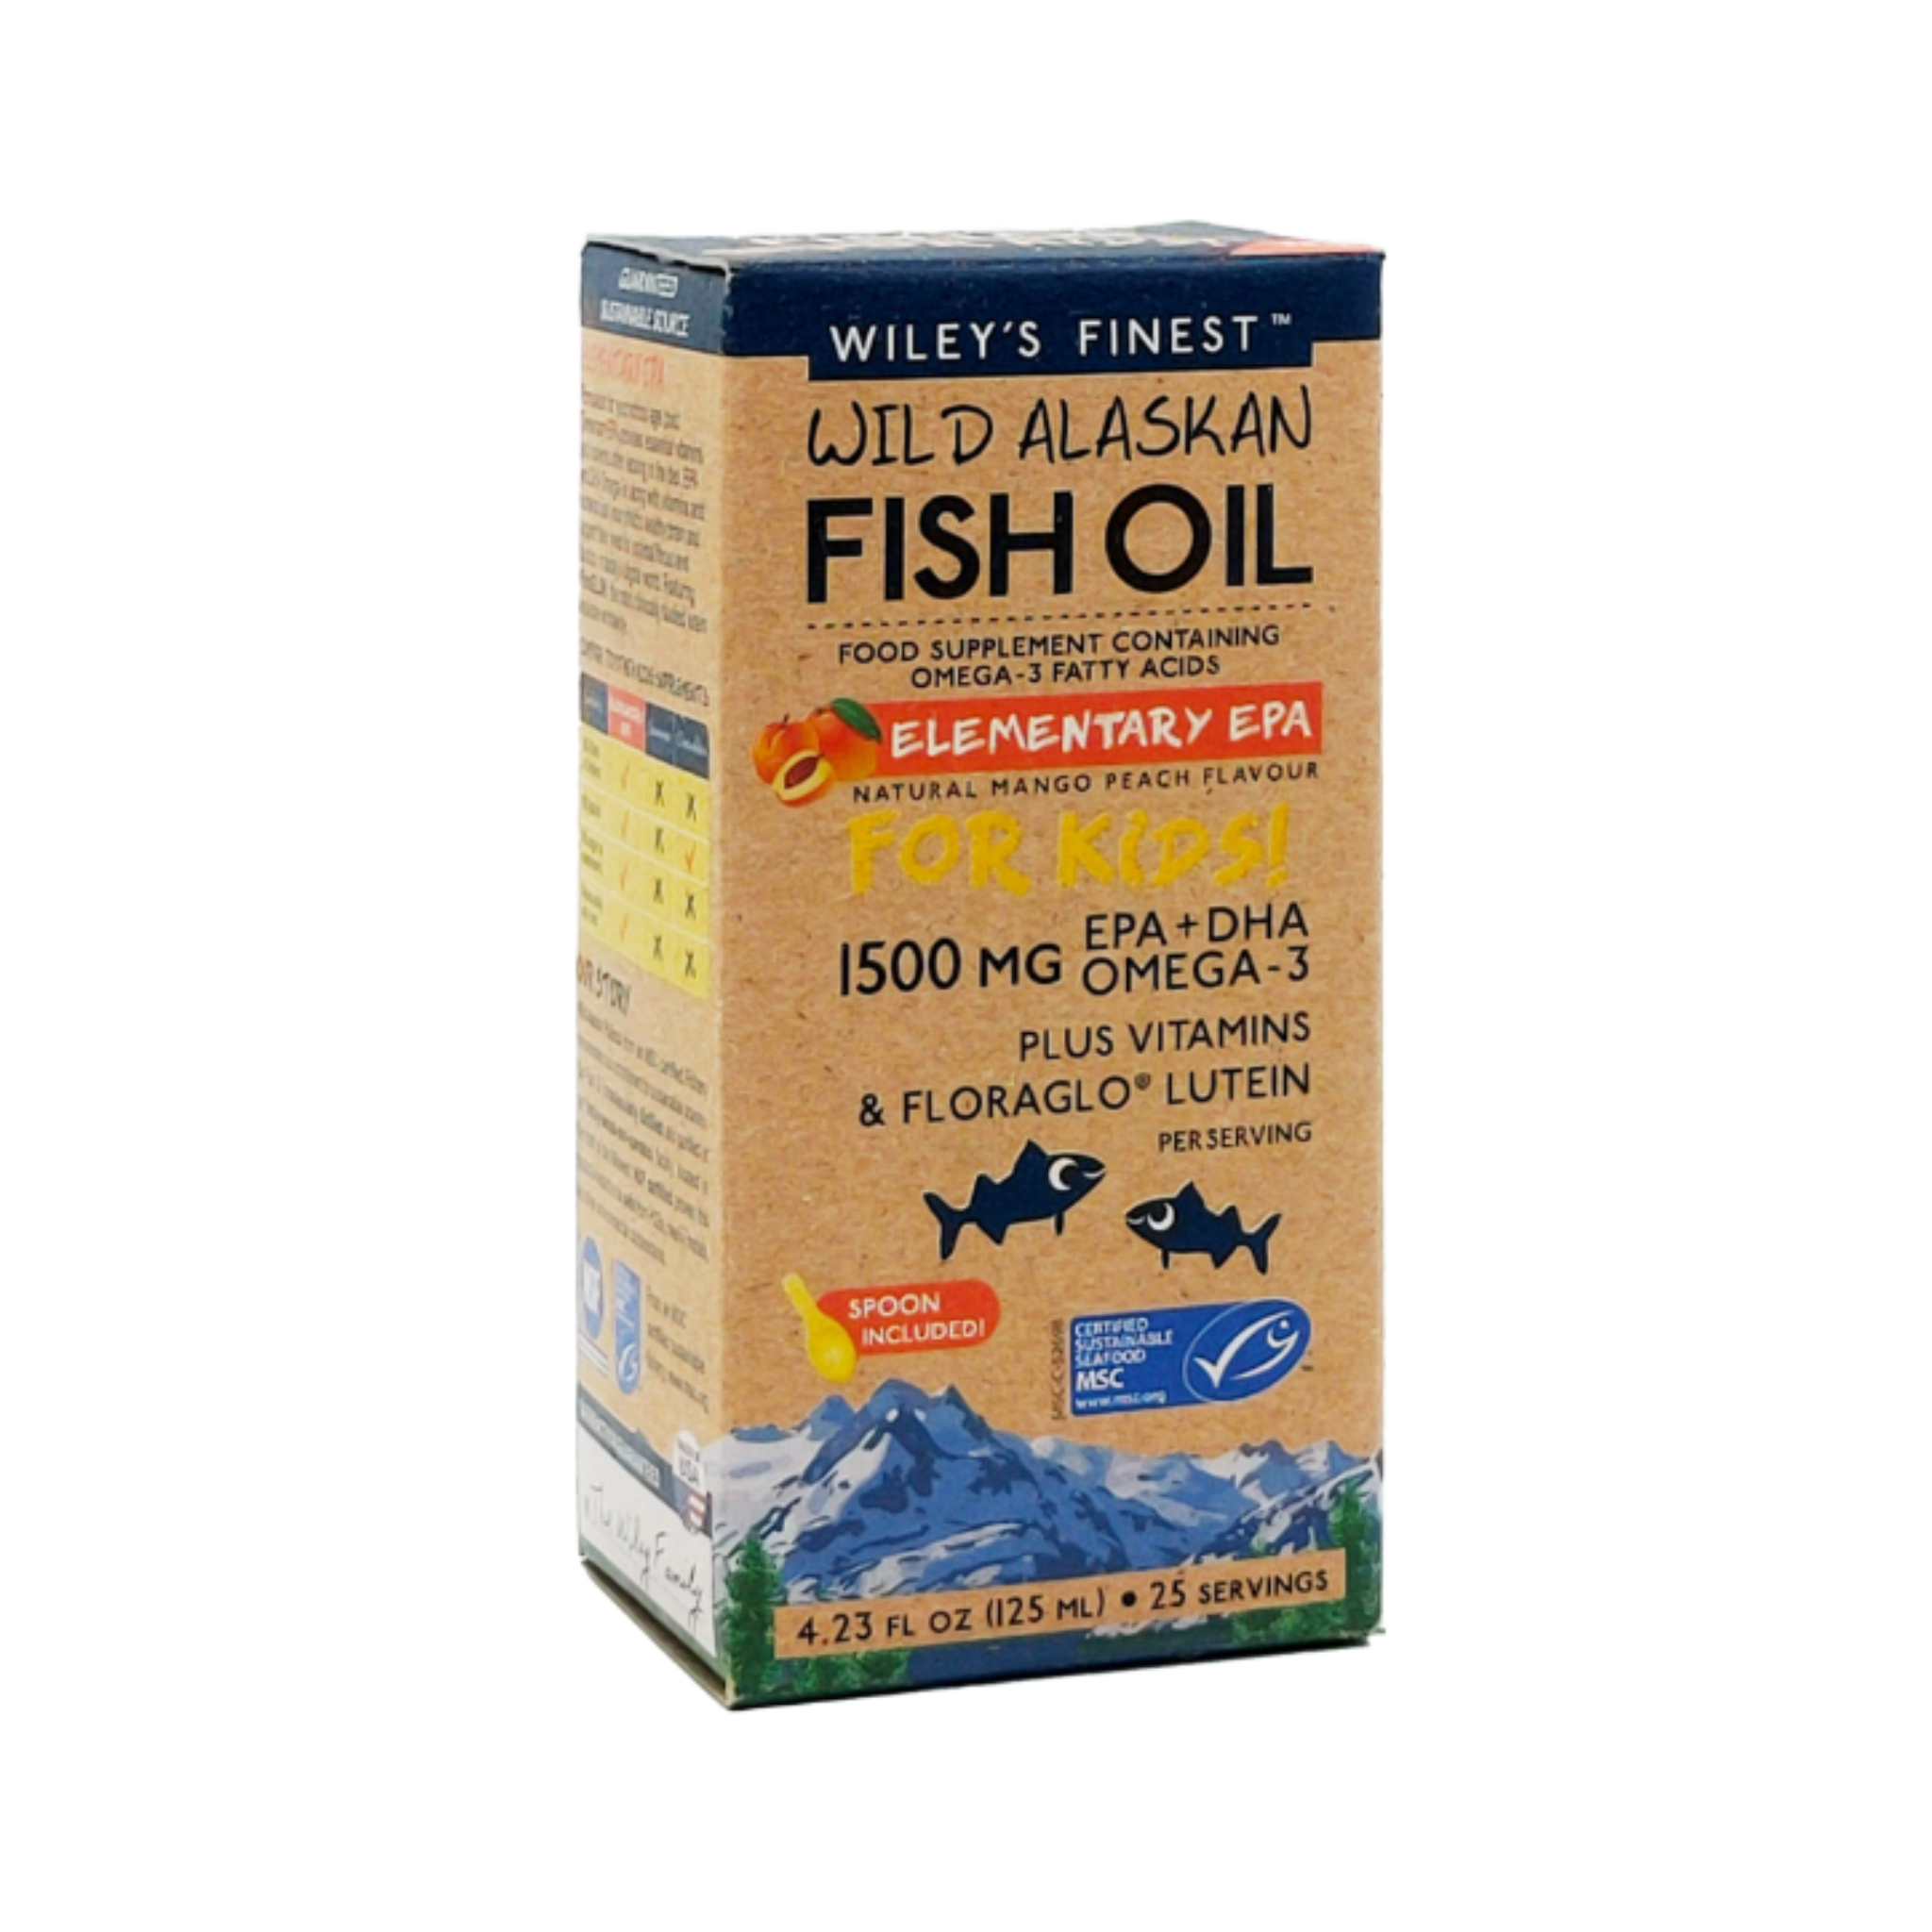 Wild Alaskan Fish Oil For Kids Elementary EPA Natural Mango Peach Flavour 1,500mg 125ml